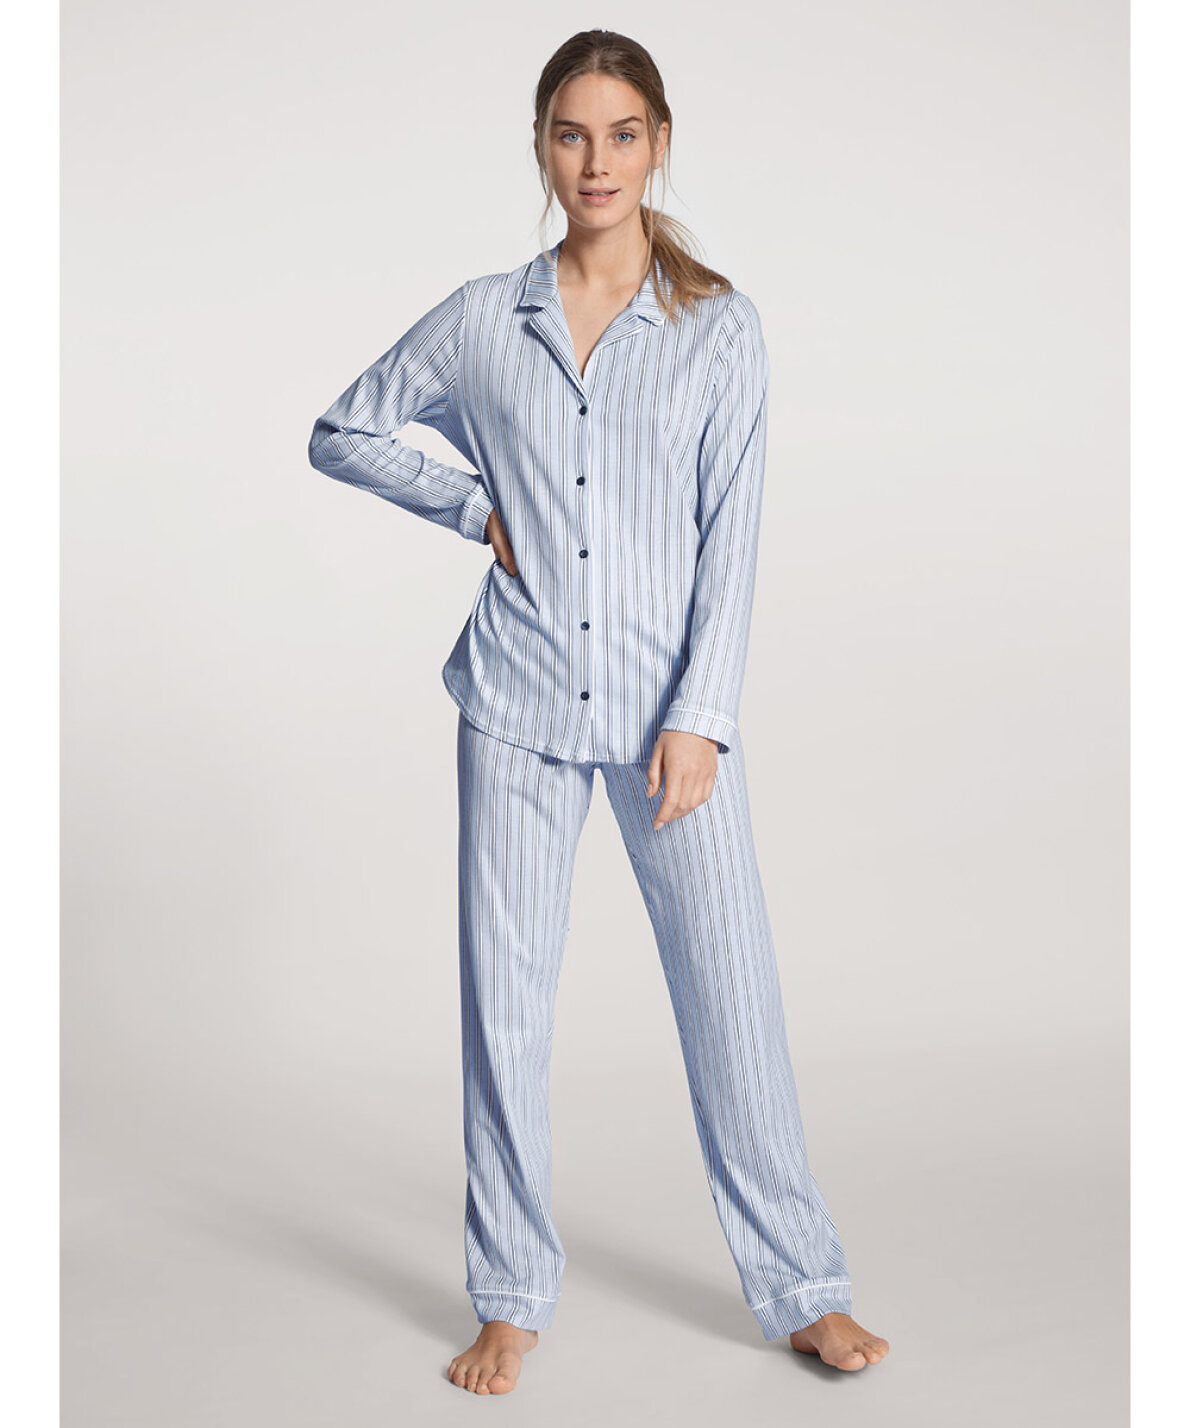 medlem Kritisere Picket Wunderwear - Sweet Dreams Pyjamas fra Calida